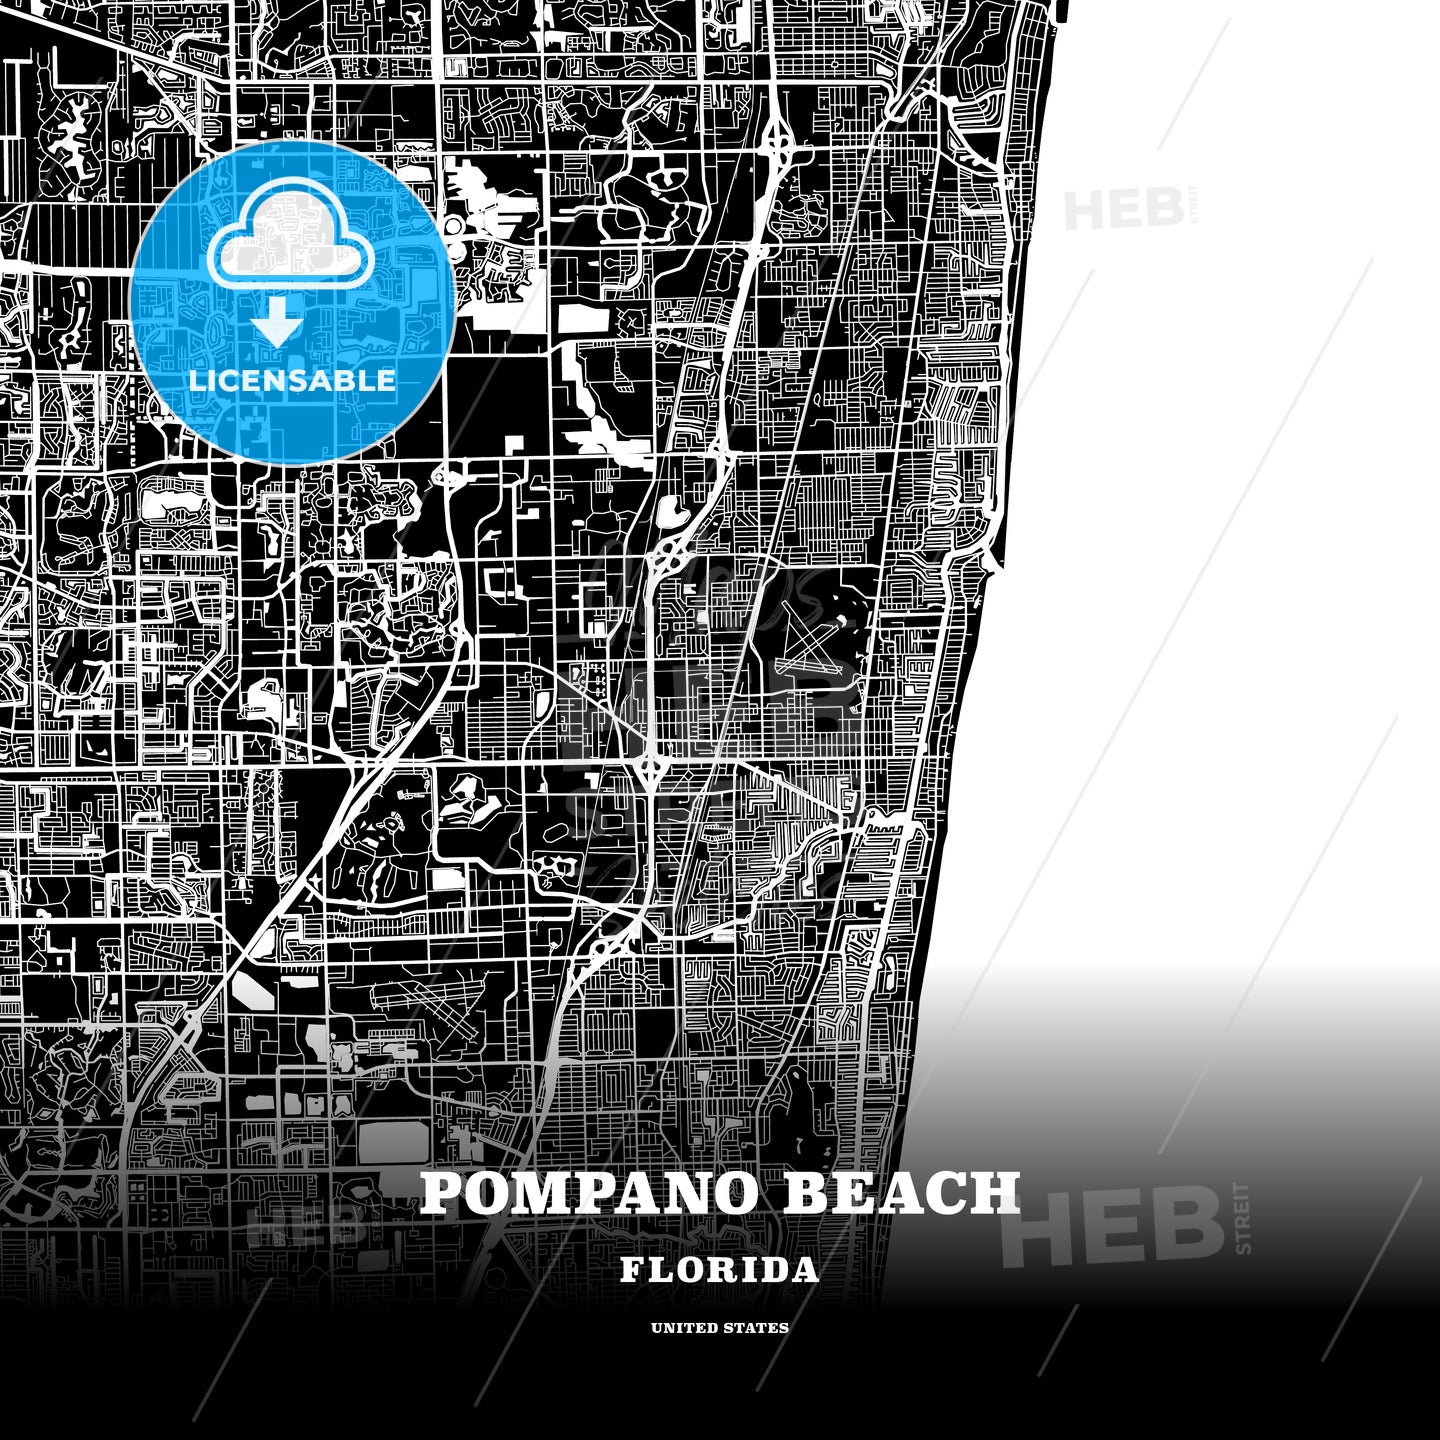 Pompano Beach, Florida, USA map